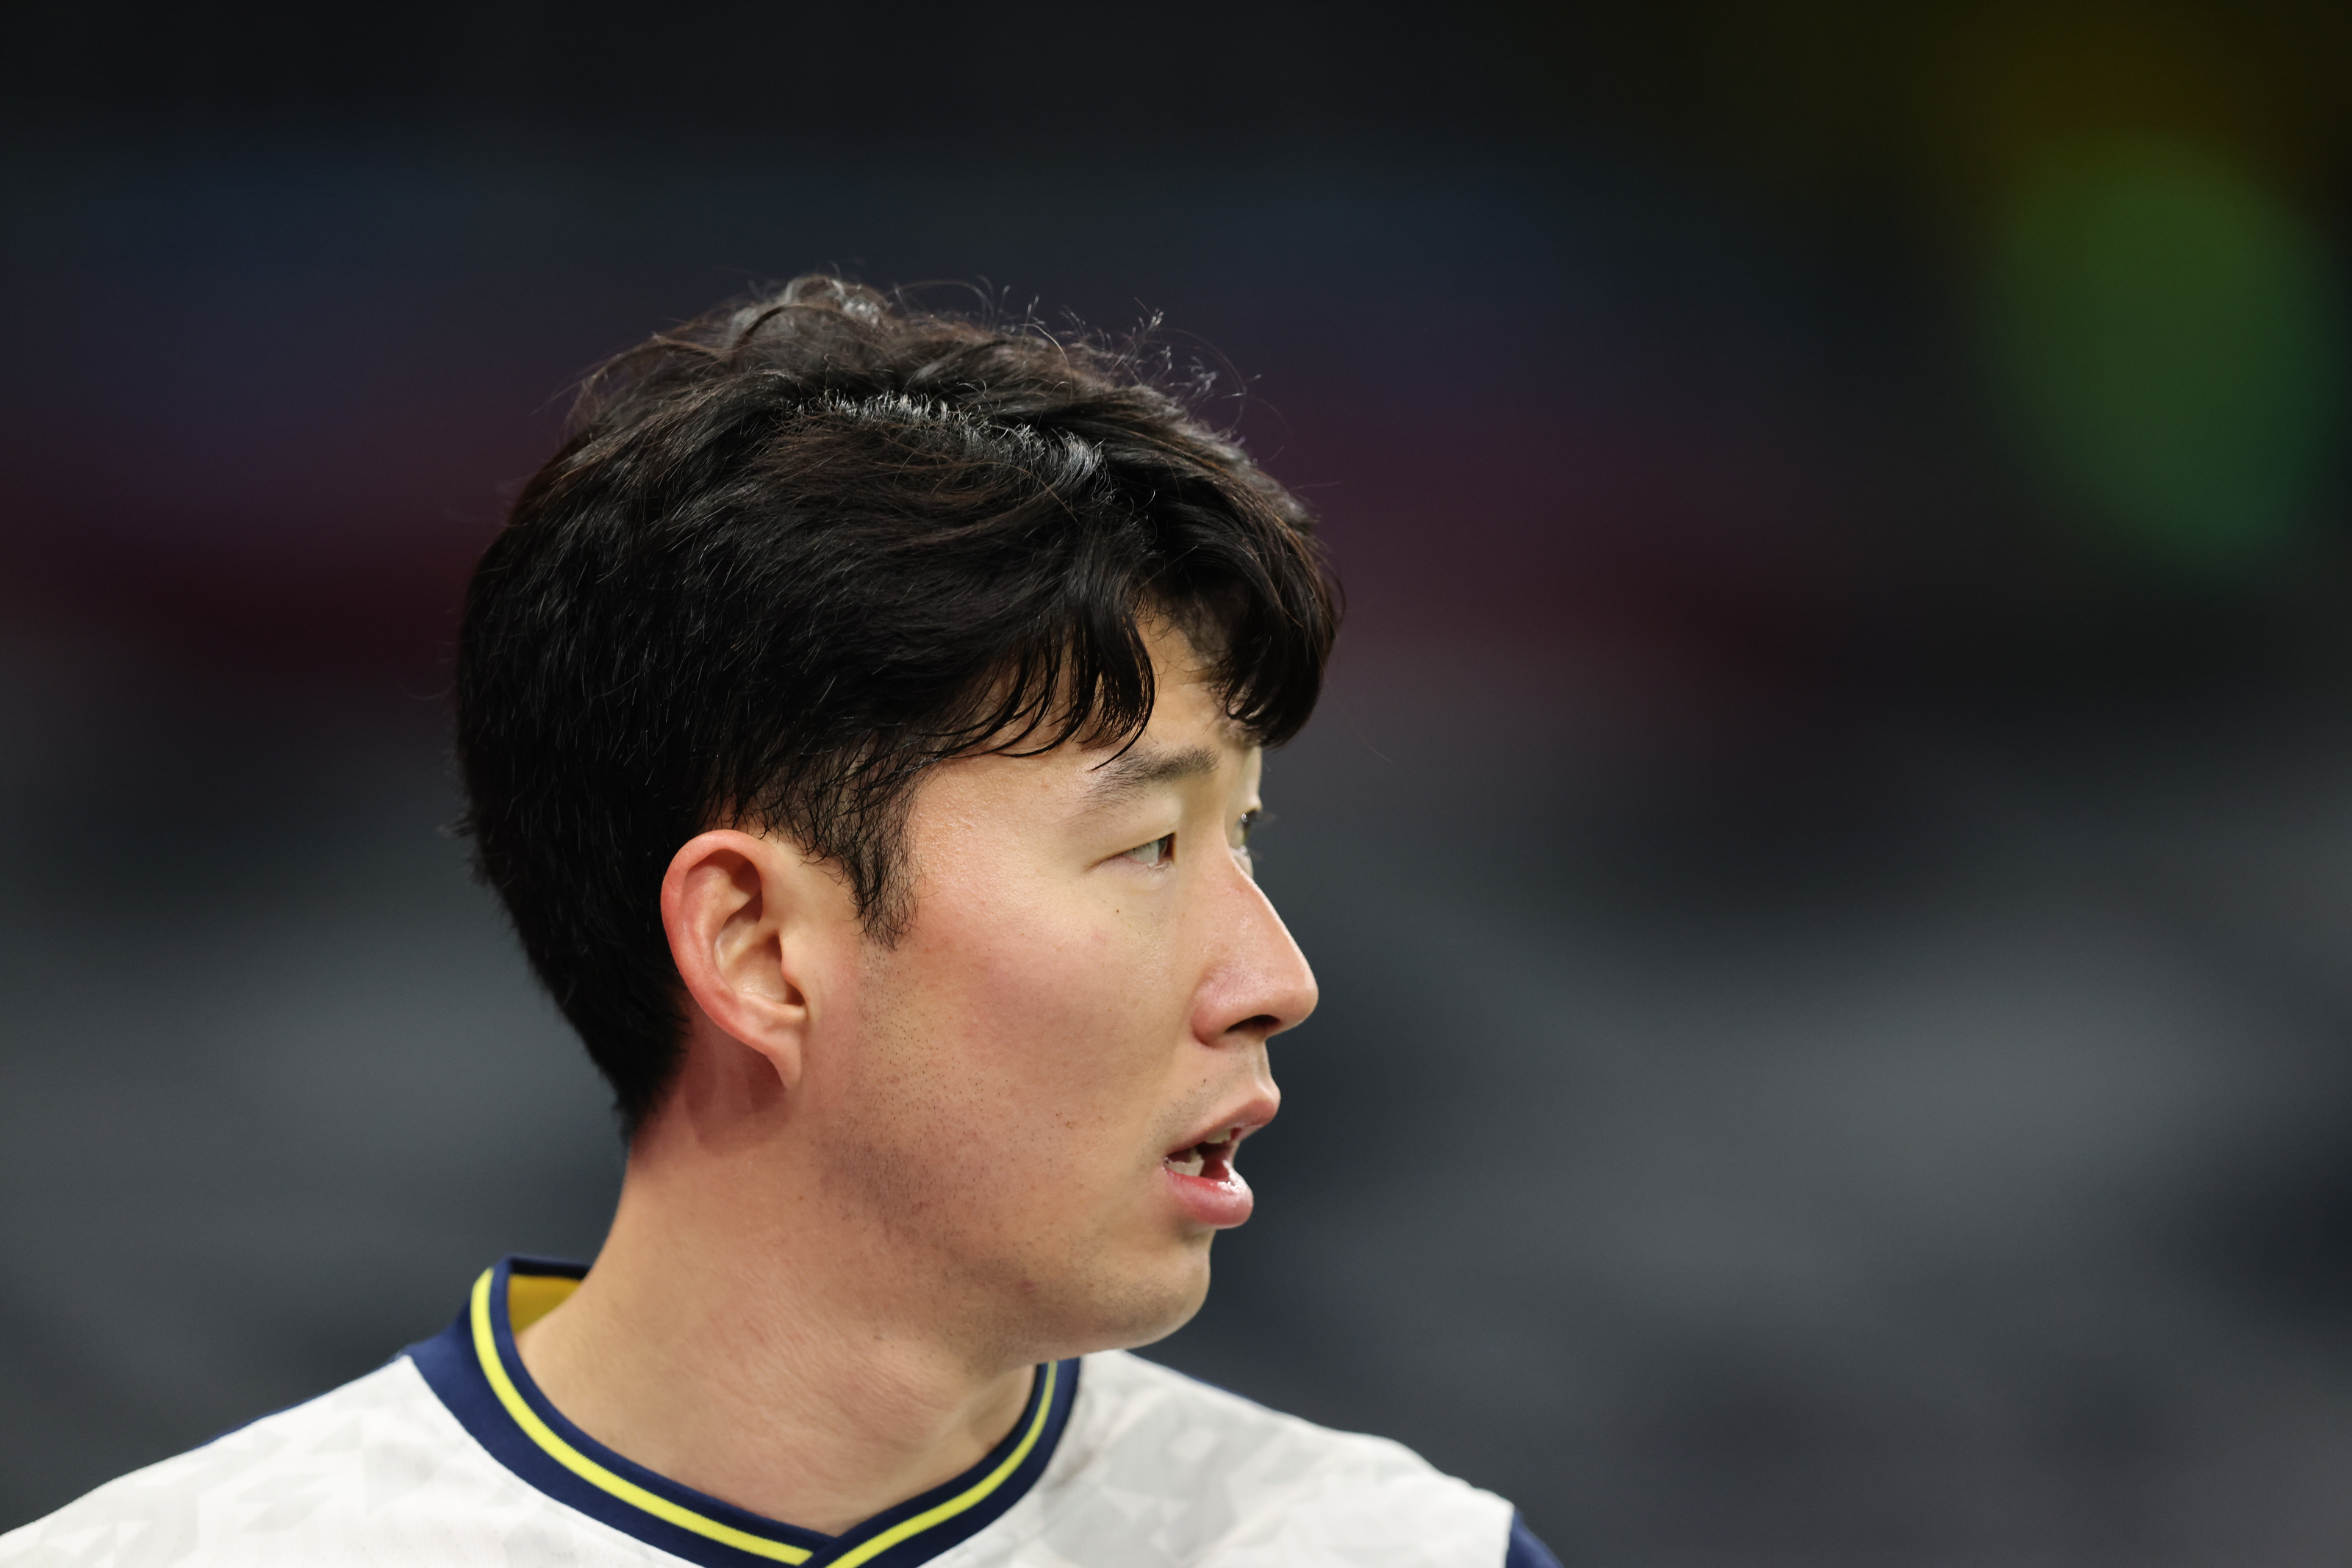 Tottenham transfer news: Son Heung-min Real Madrid